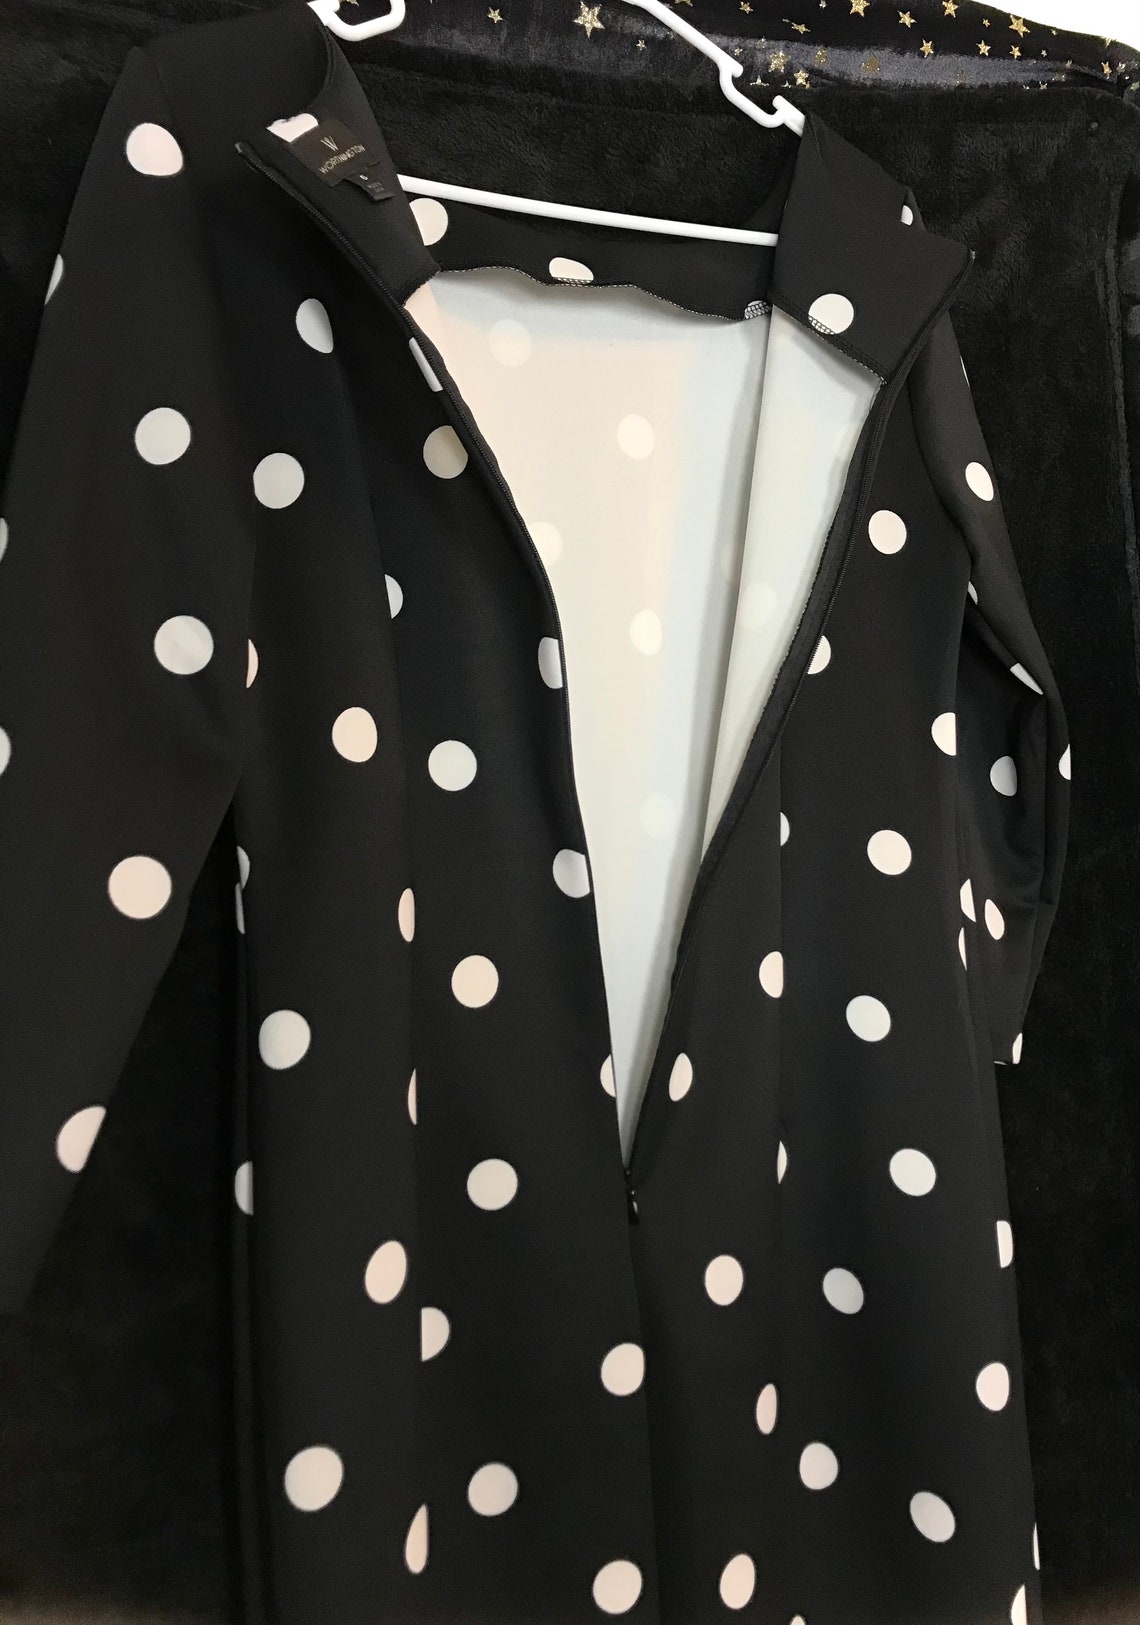 Black and White Large Polka Dots 3/4 Sleeve Knee Length Dress - Etsy